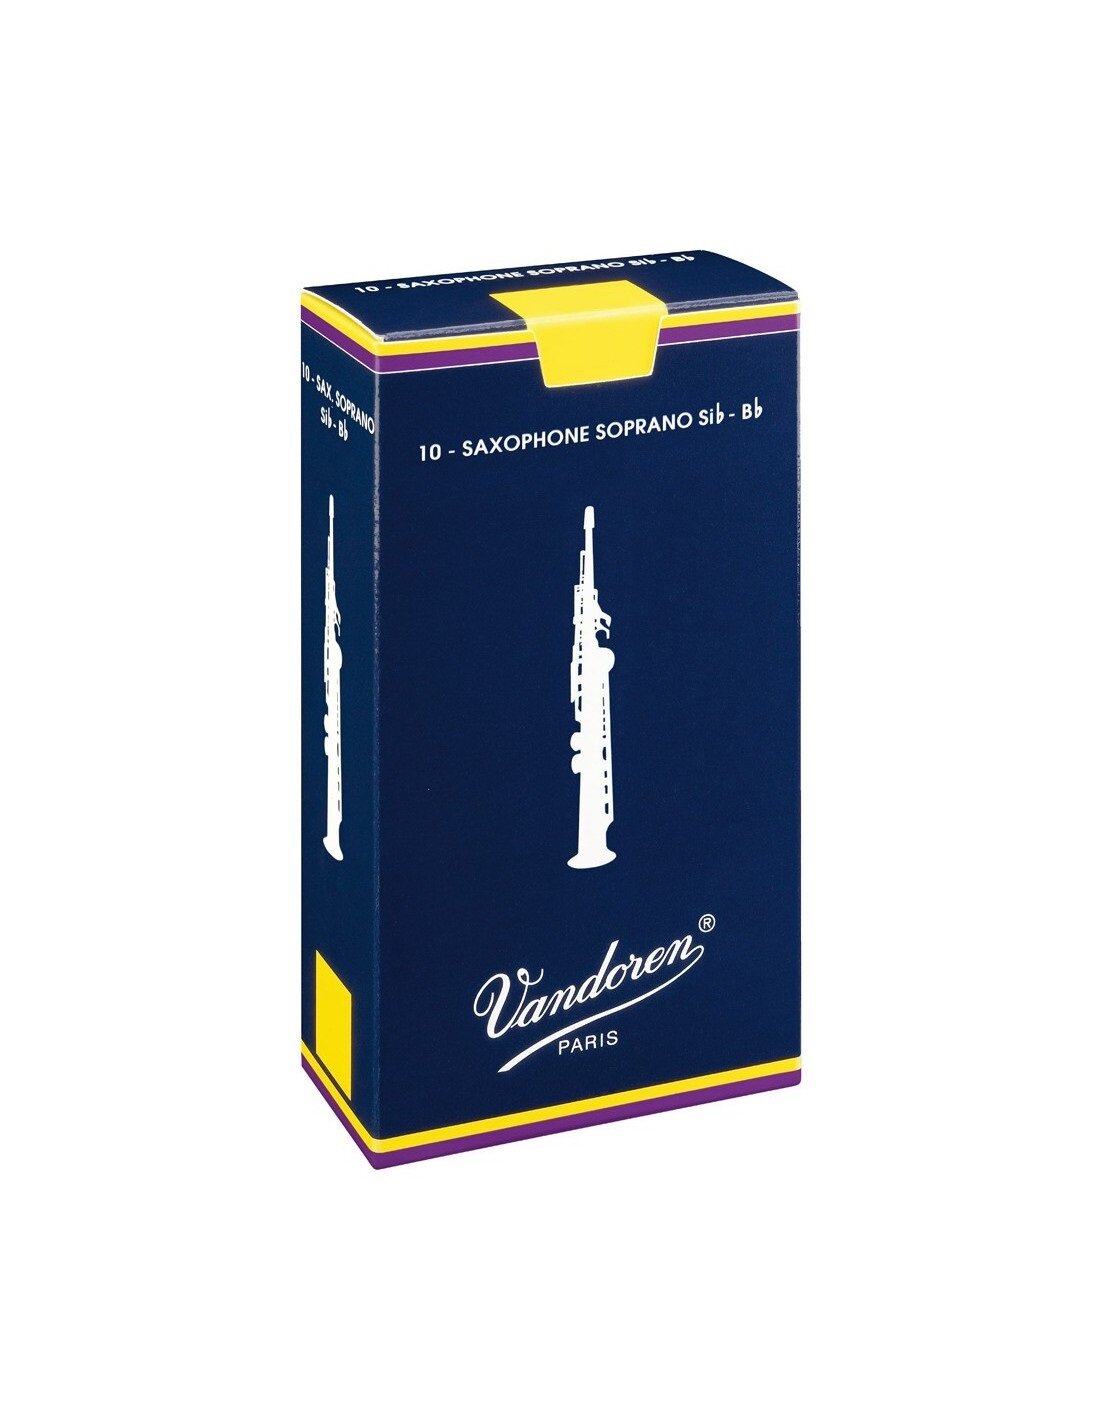 Vandoren Classic Saxophone Soprano Sib Force 4 x10 : photo 1